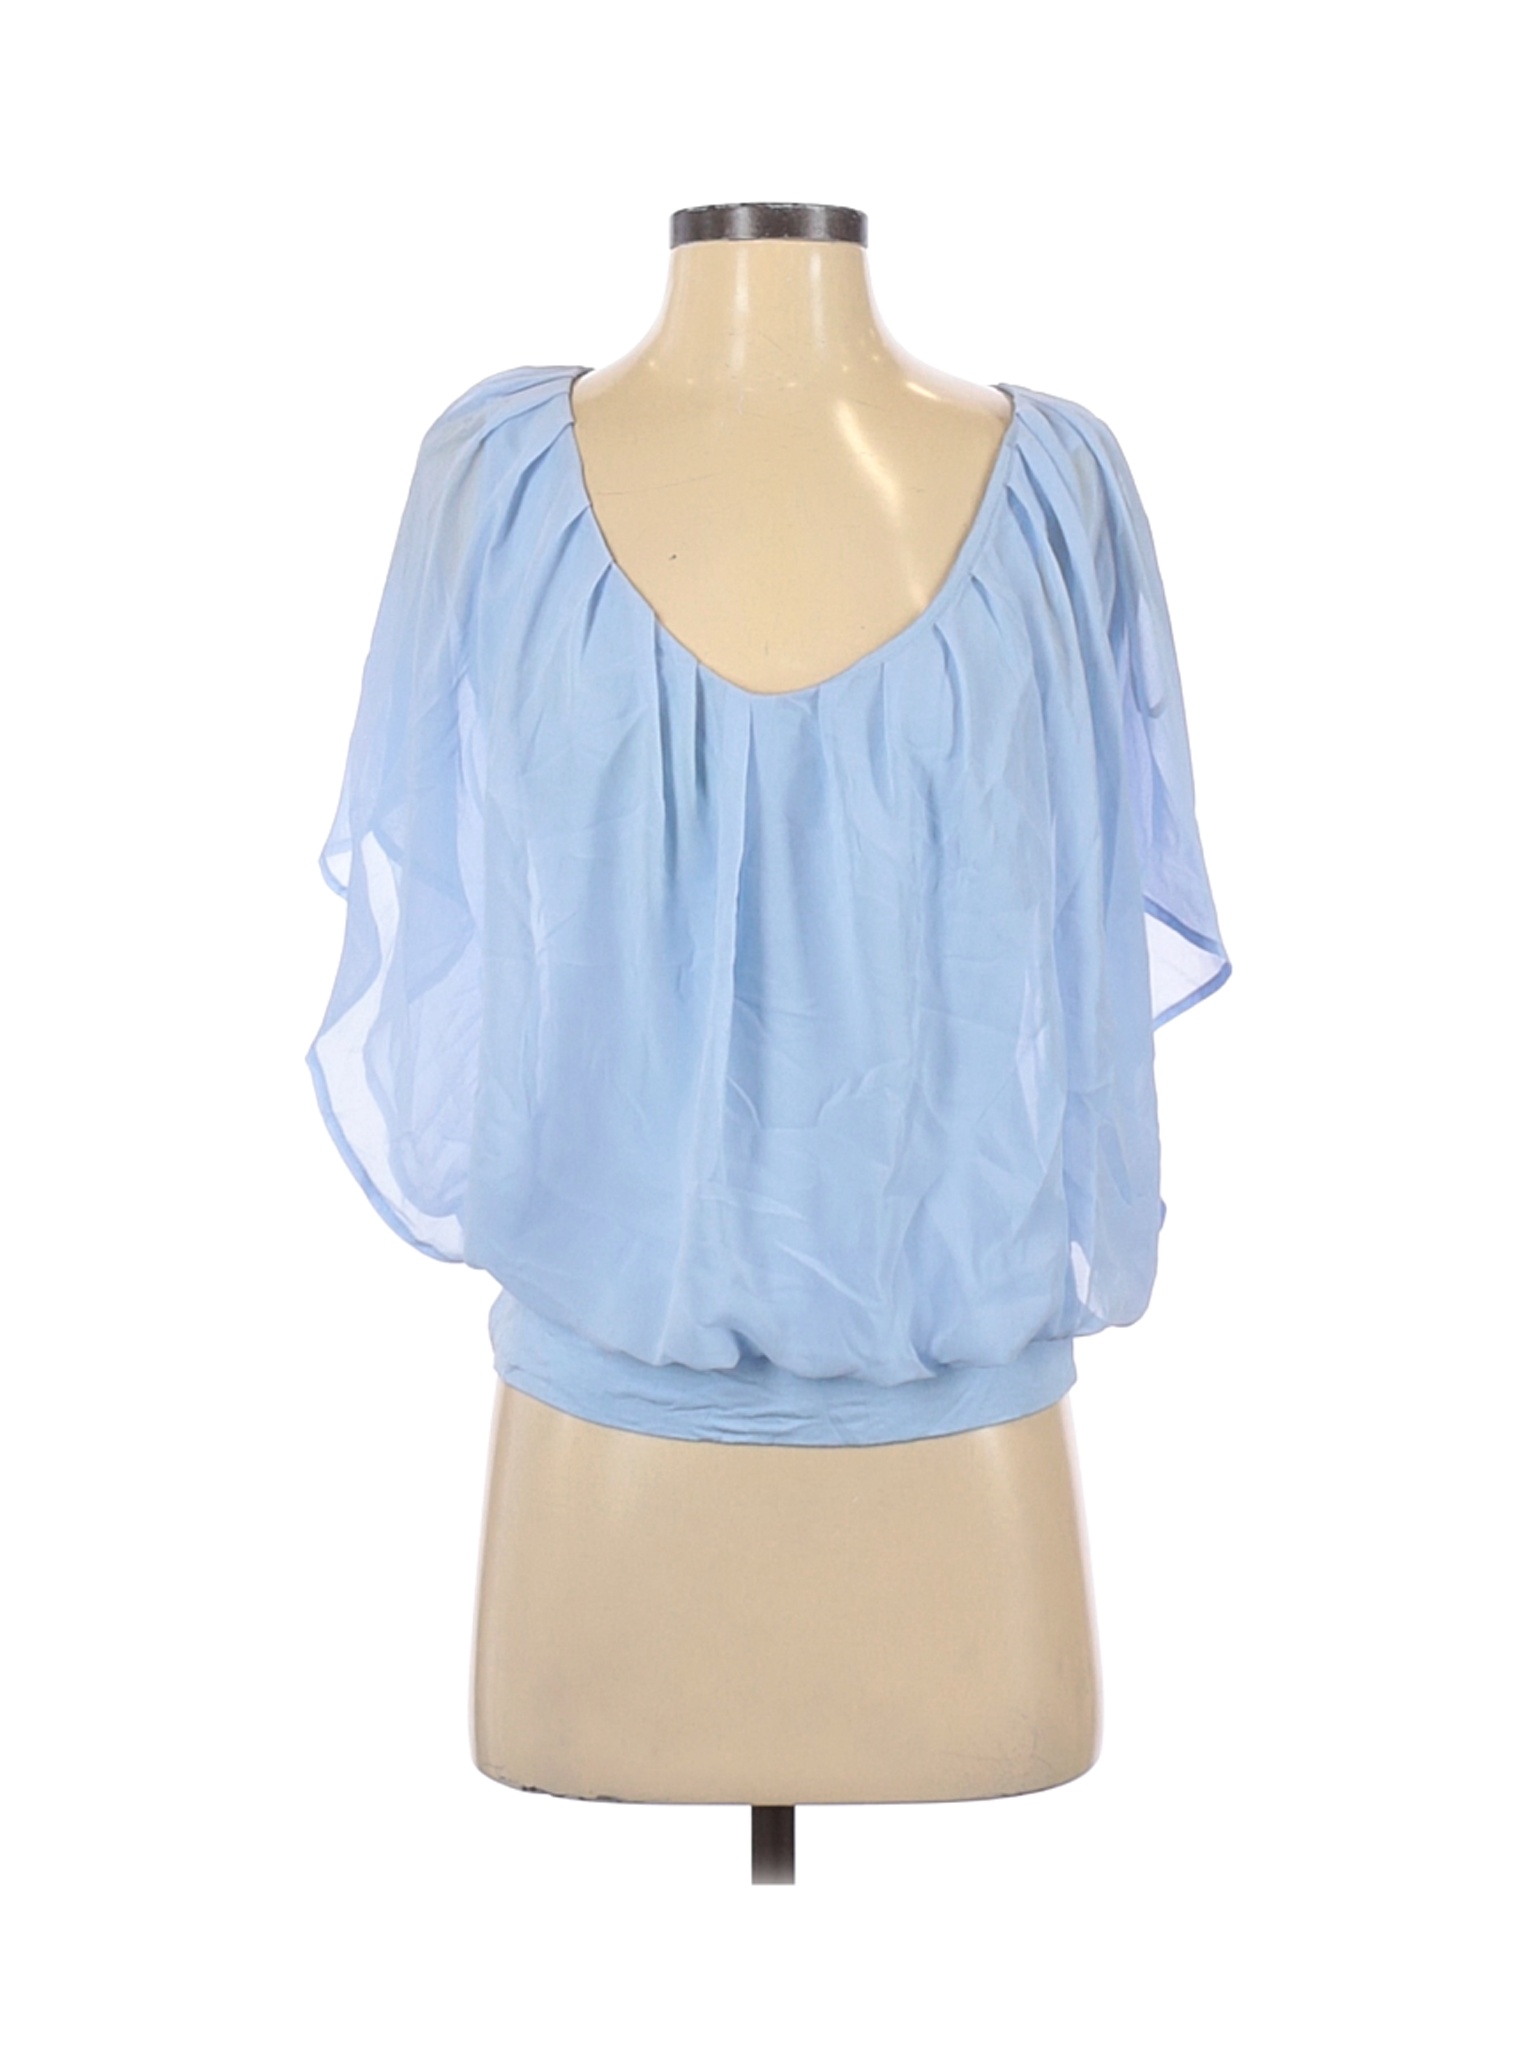 NWT Joseph A. Women Blue Short Sleeve Blouse S | eBay